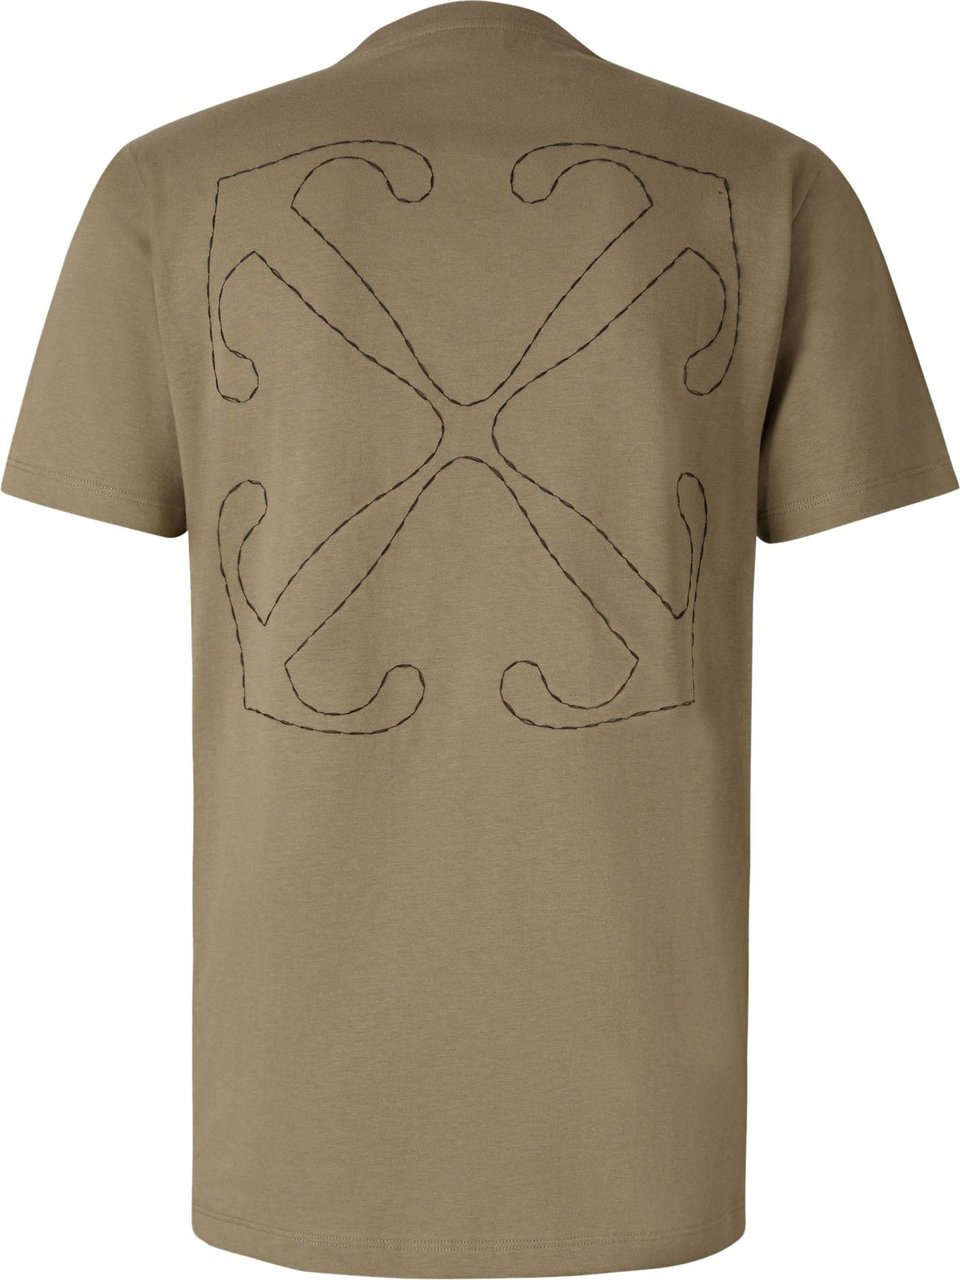 OFF-WHITE Logo Stitch T-Shirt Groen